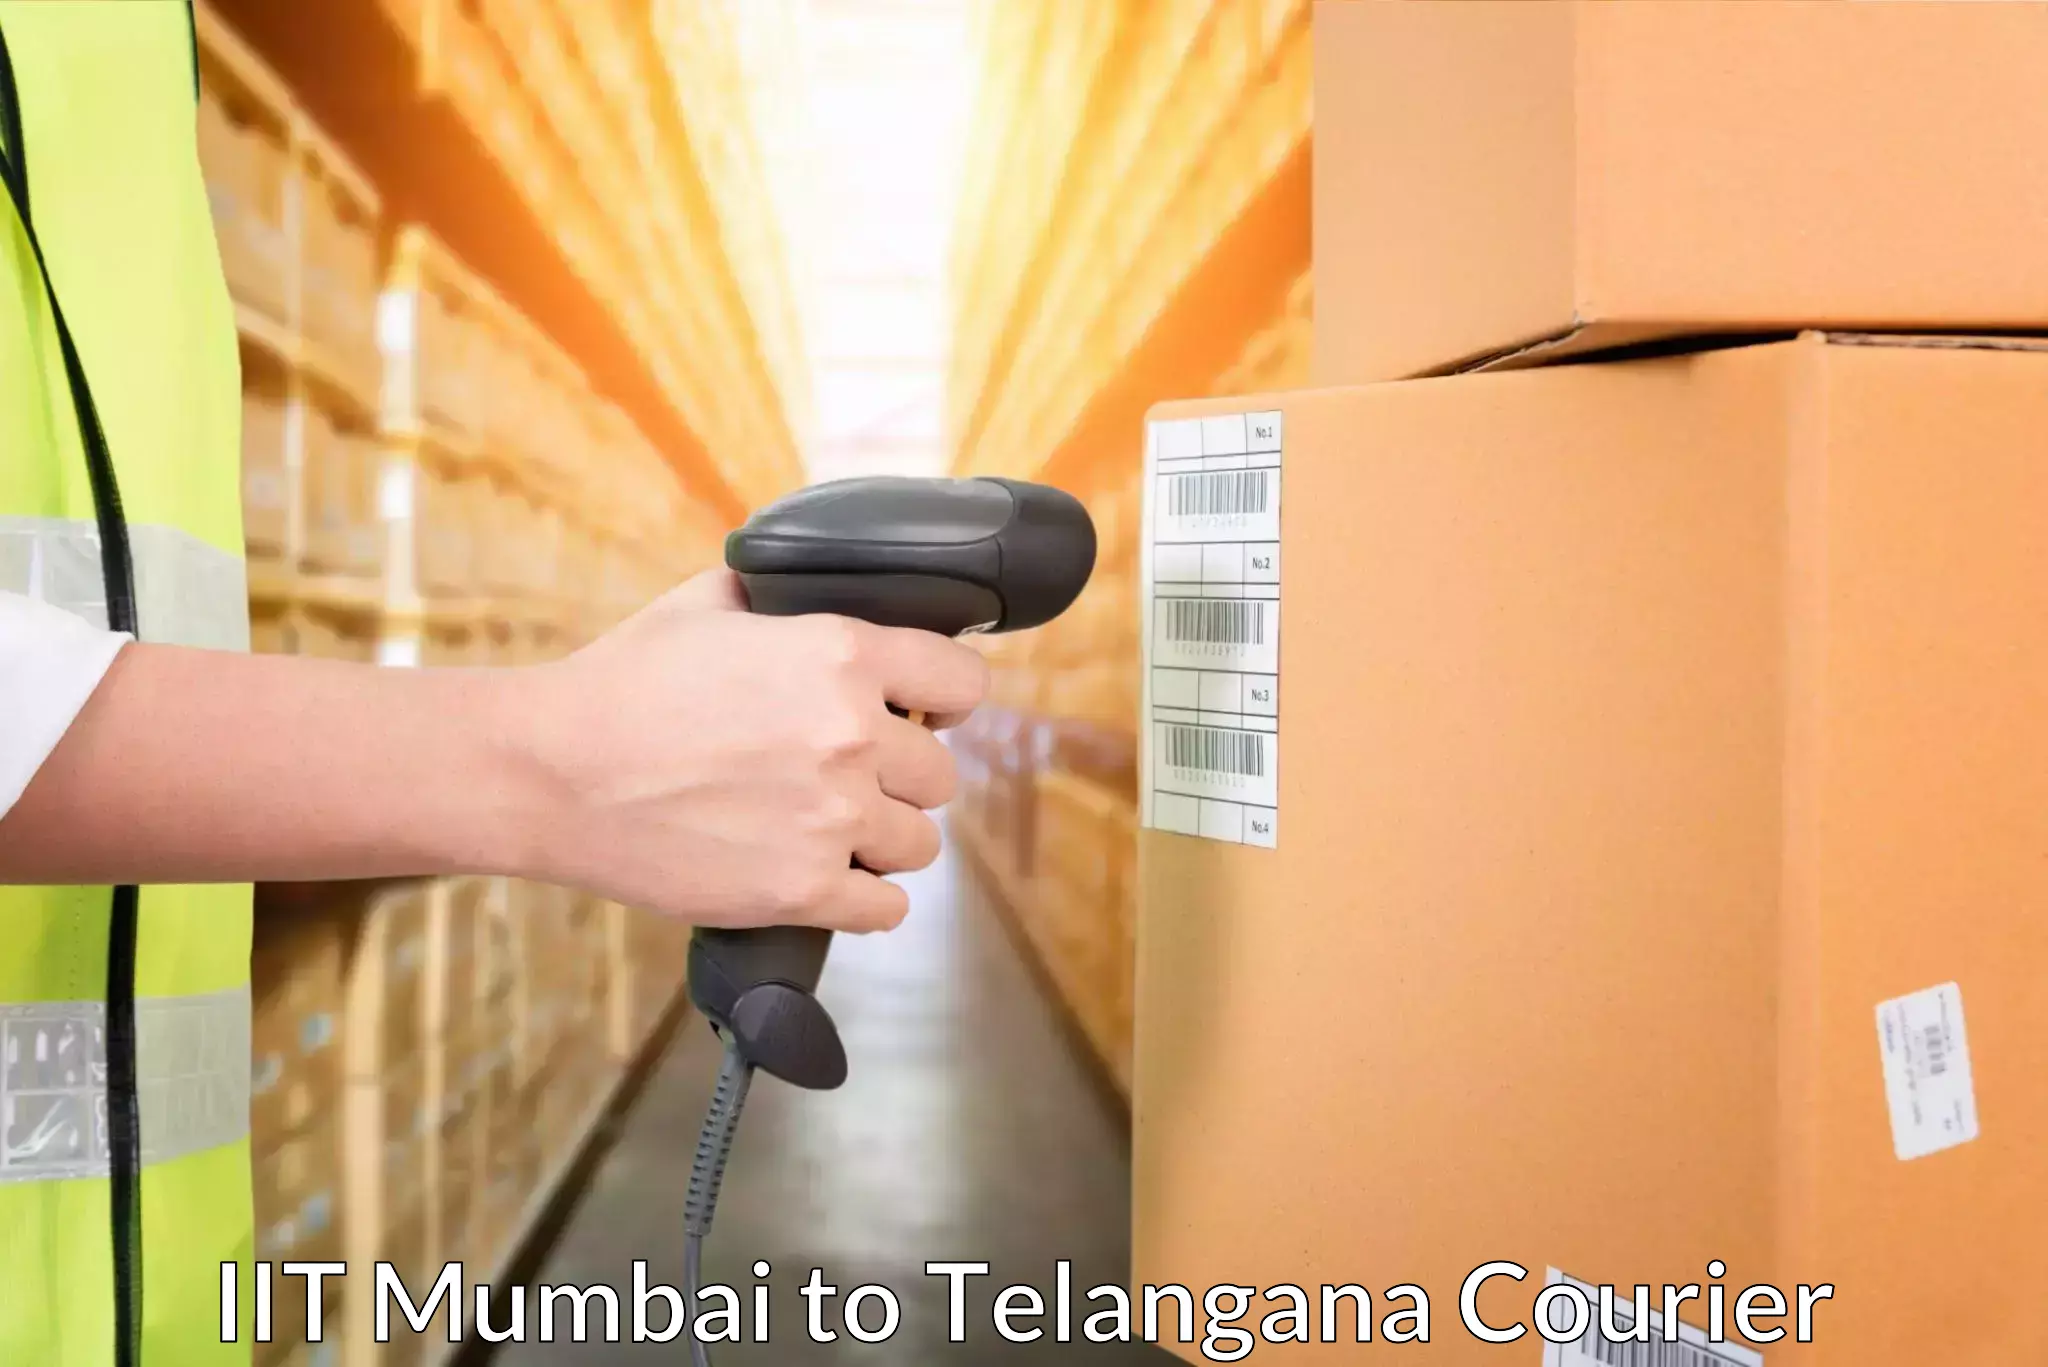 User-friendly delivery service IIT Mumbai to Telangana